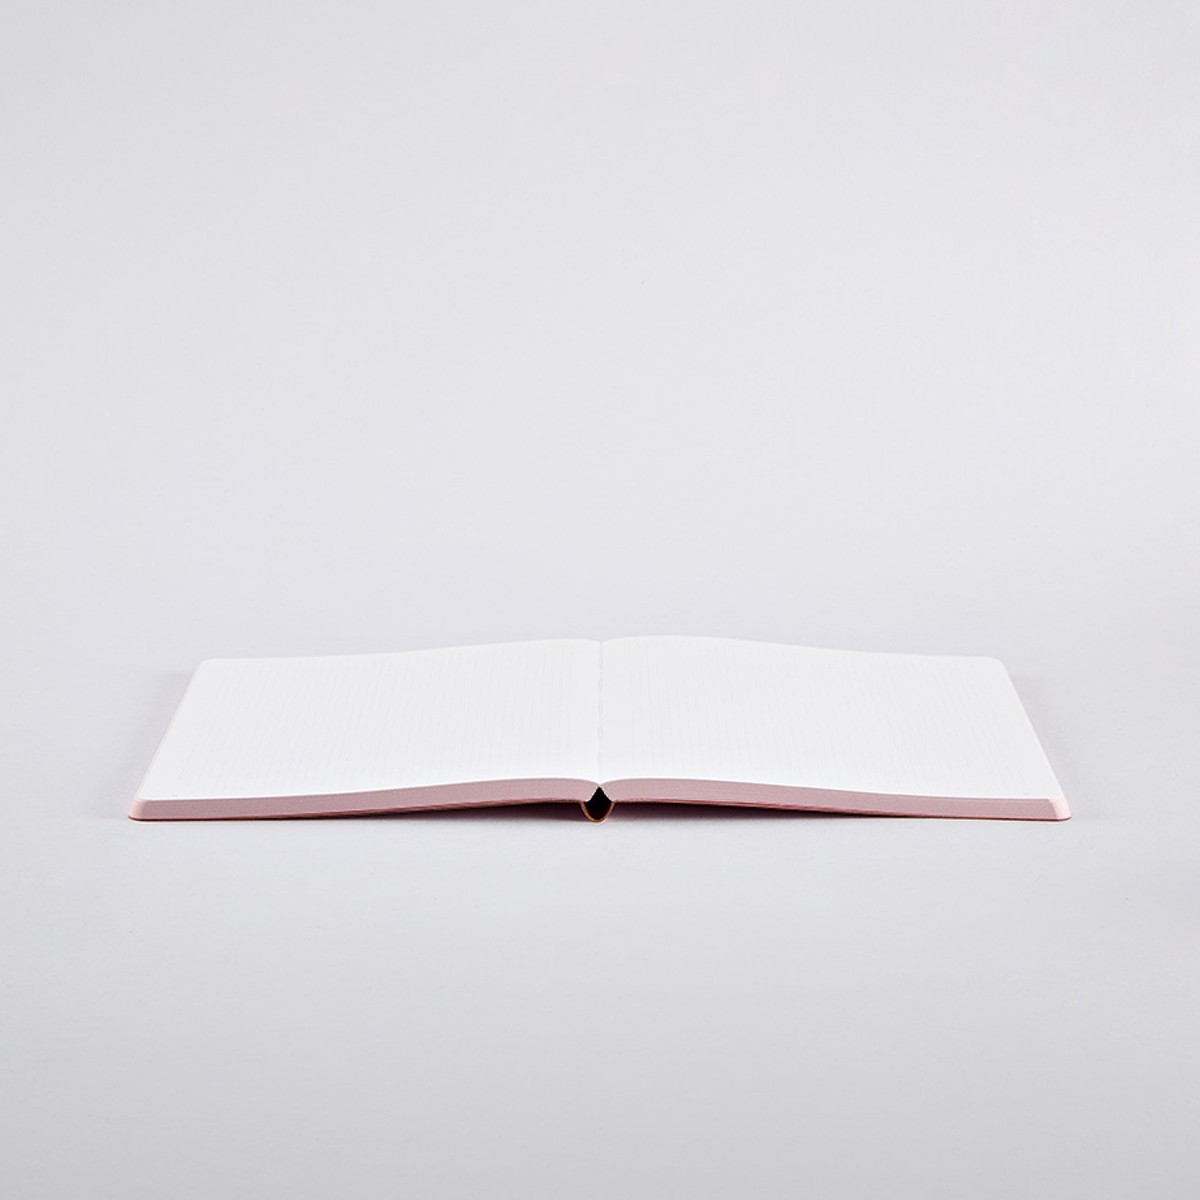 Nuuna Notebook Colour Clash L Light - SCRATCHED CANDY